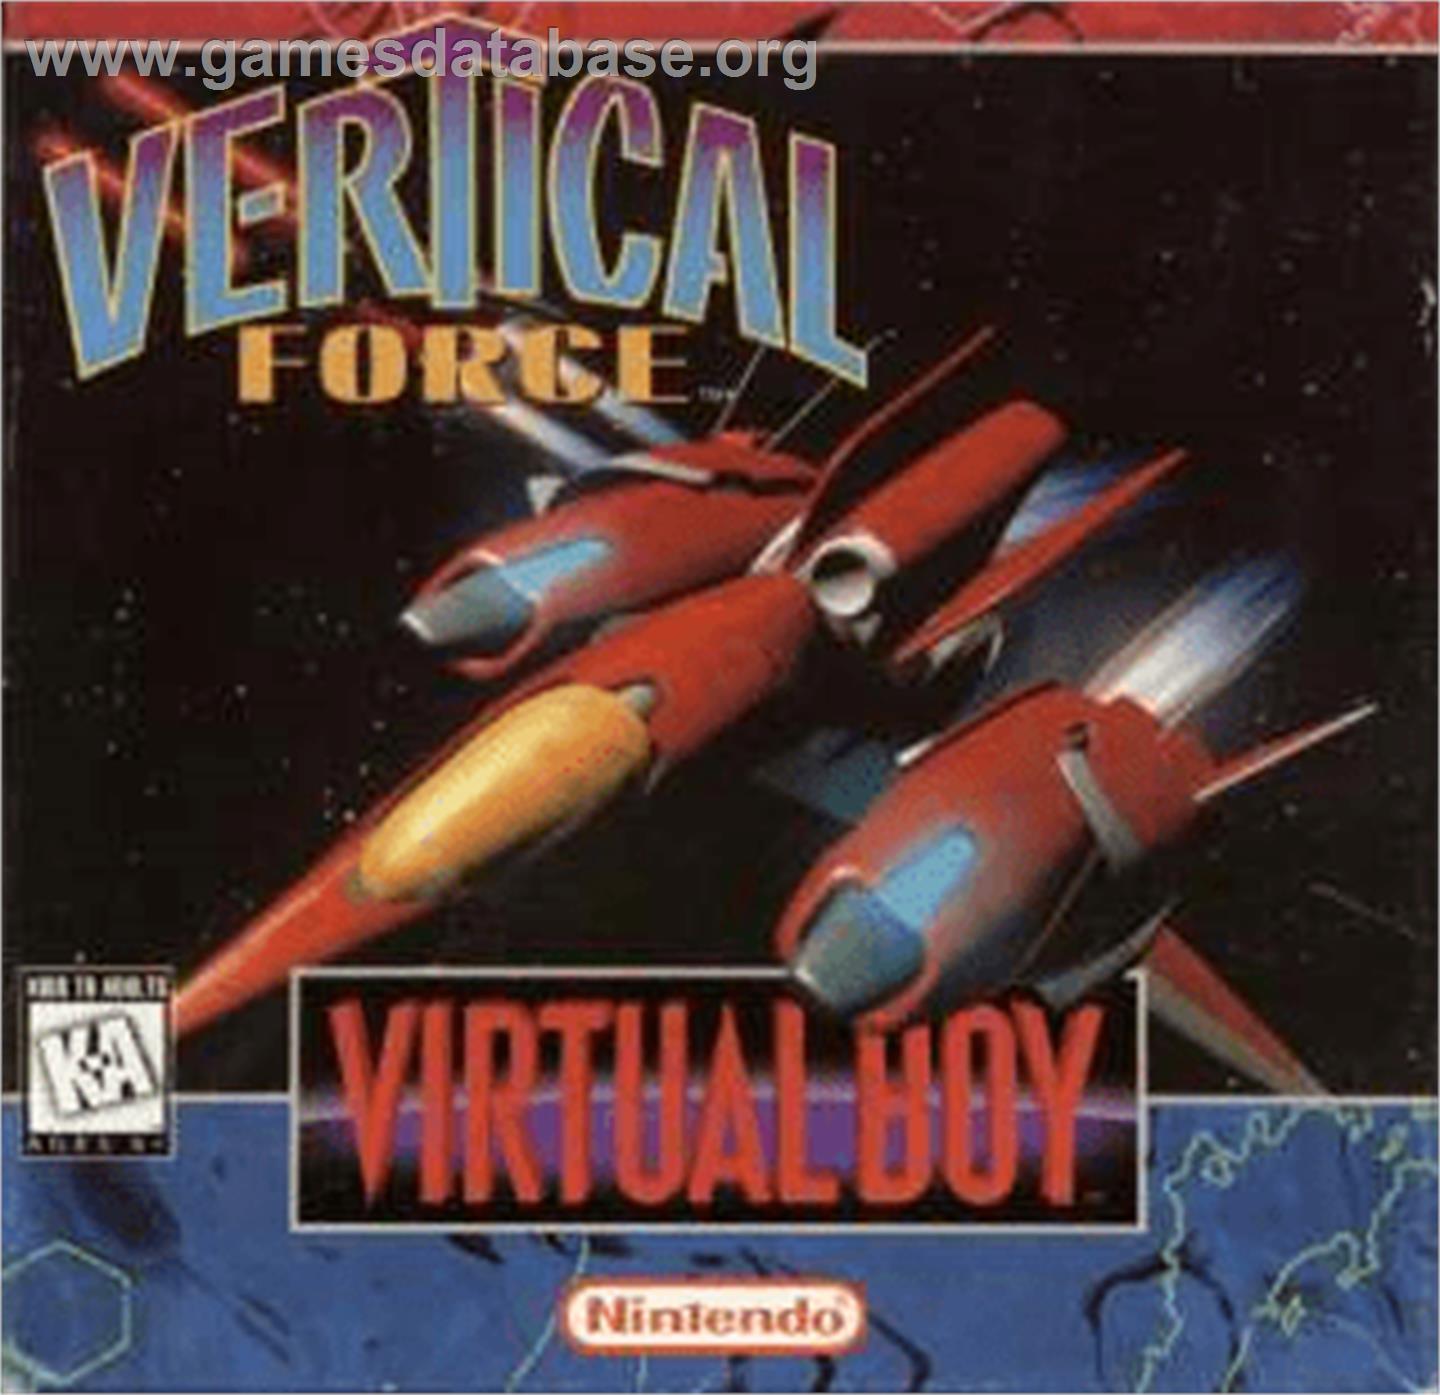 Vertical Force - Nintendo Virtual Boy - Artwork - Box